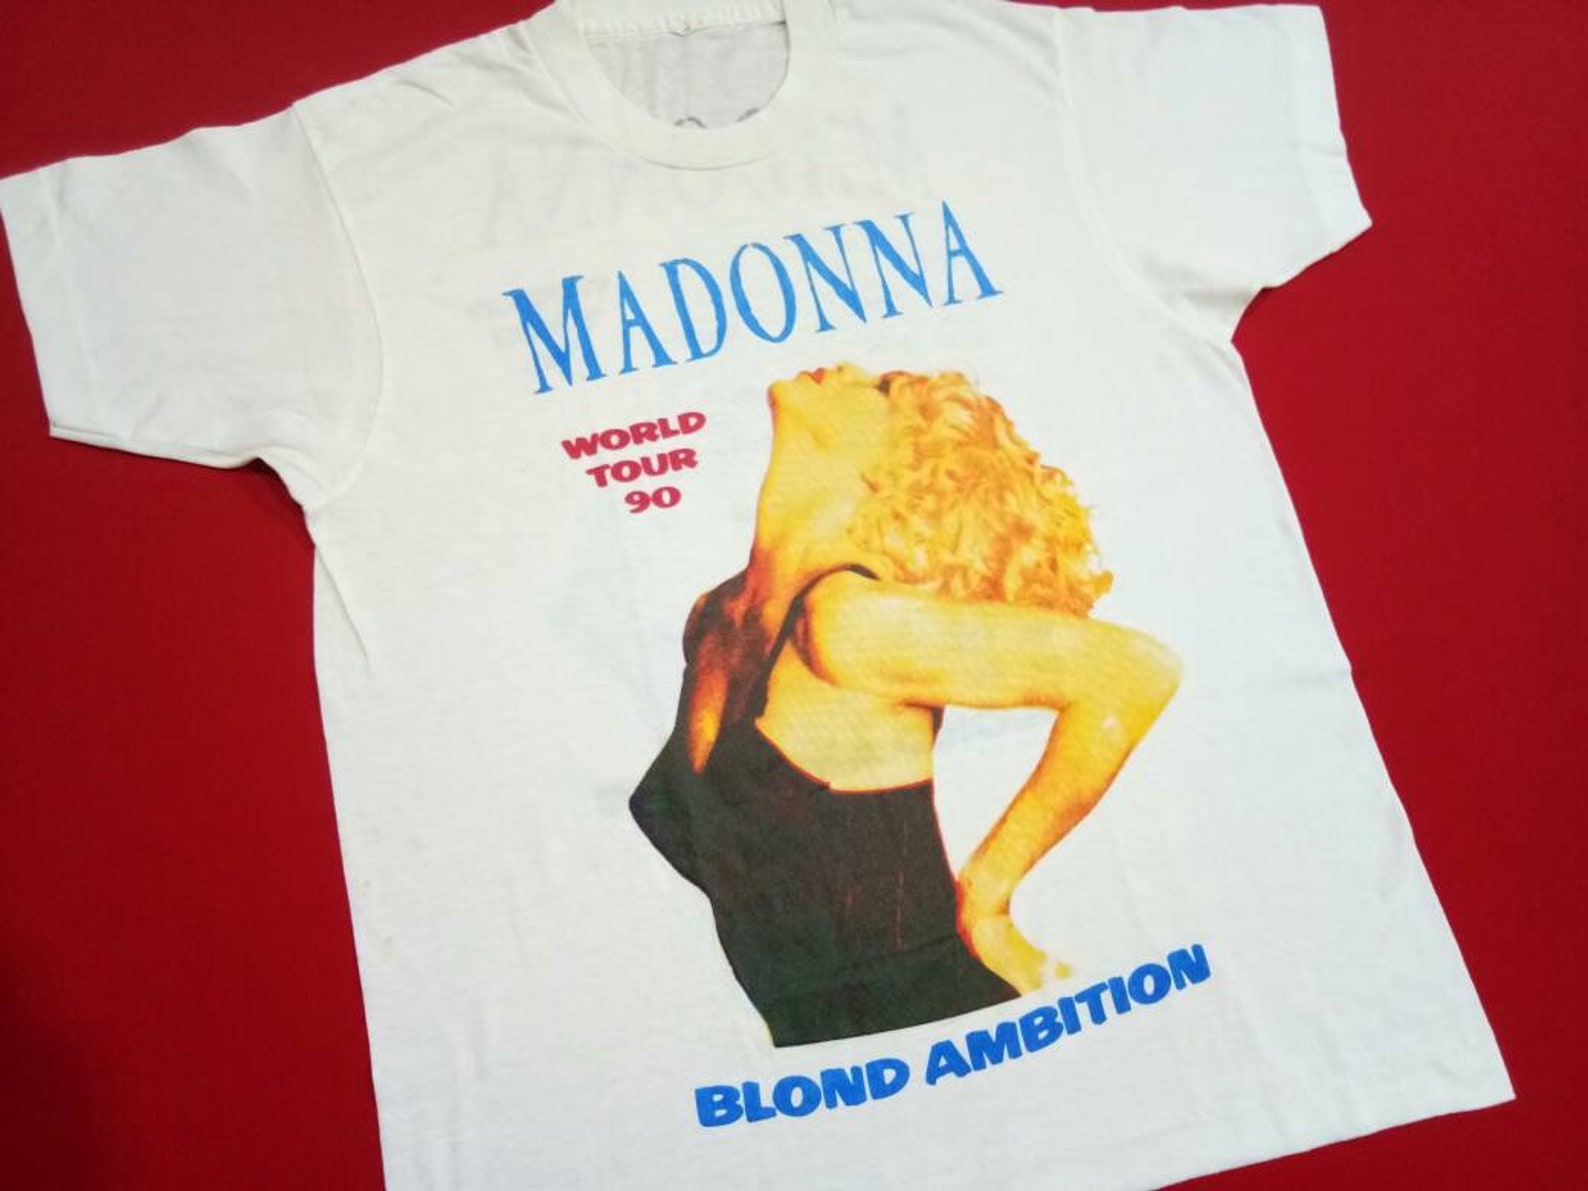 madonna blonde ambition tour tshirt